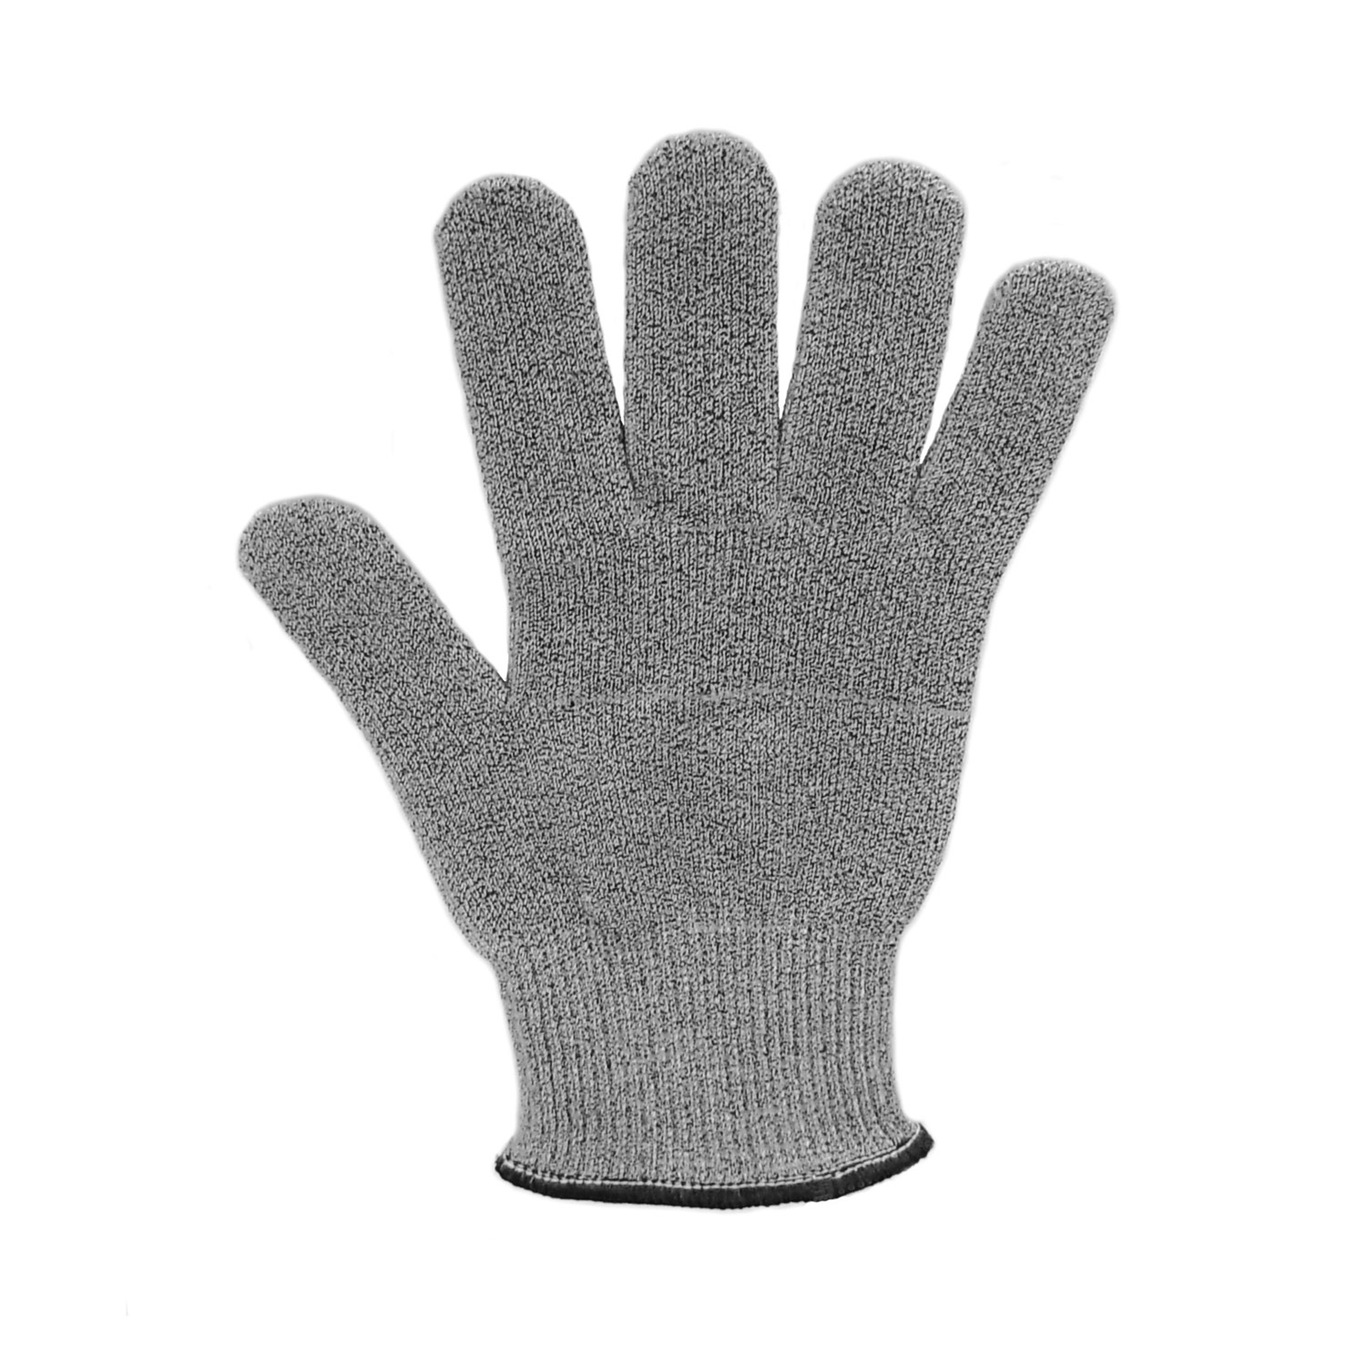 Protective Glove, Grey